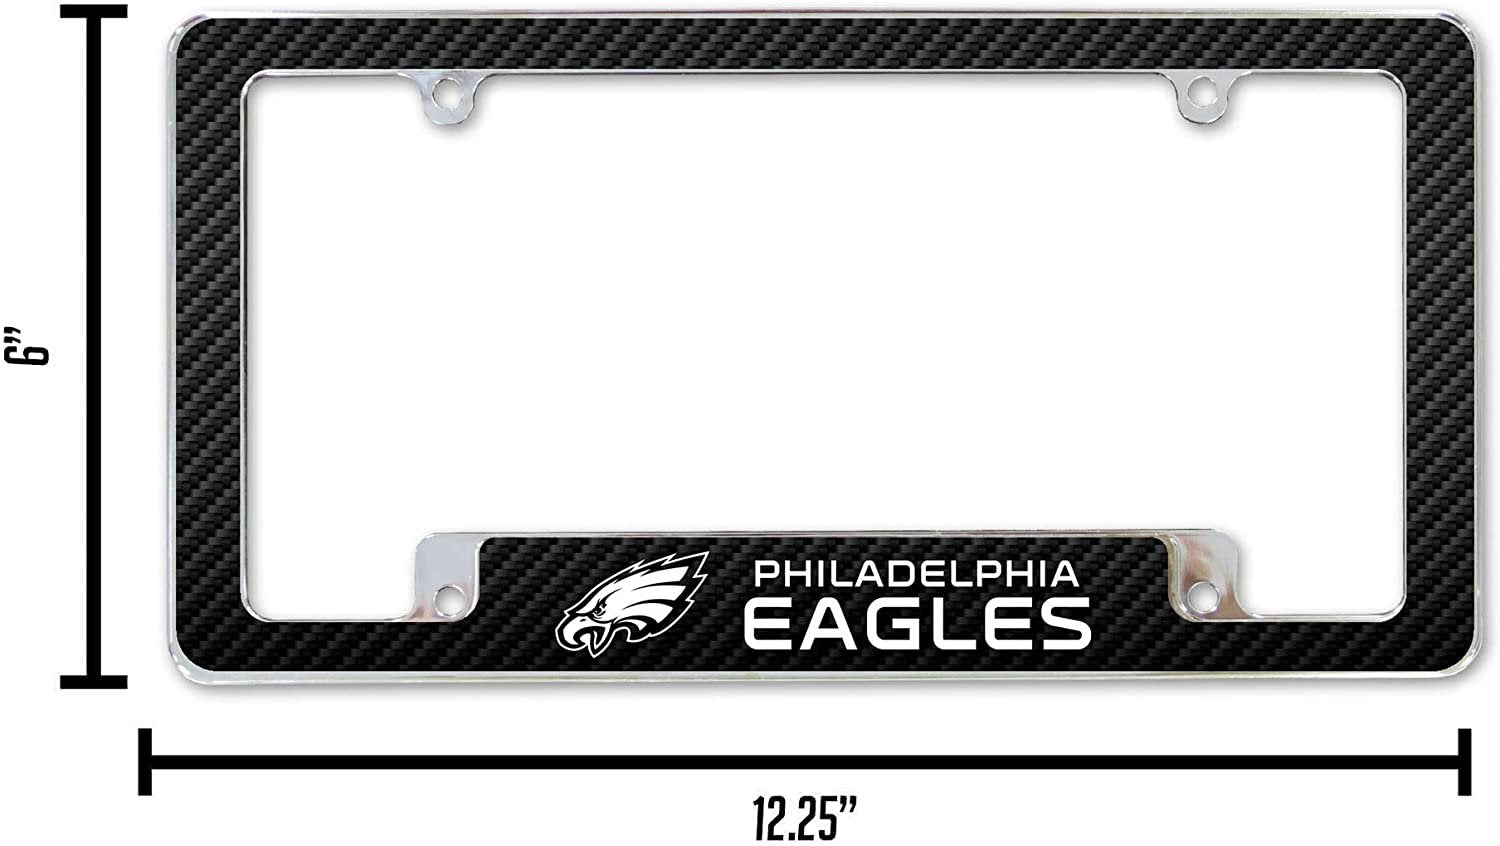 Philadelphia Eagles Metal License Plate Frame Chrome Tag Cover Carbon Fiber Design 6x12 Inch